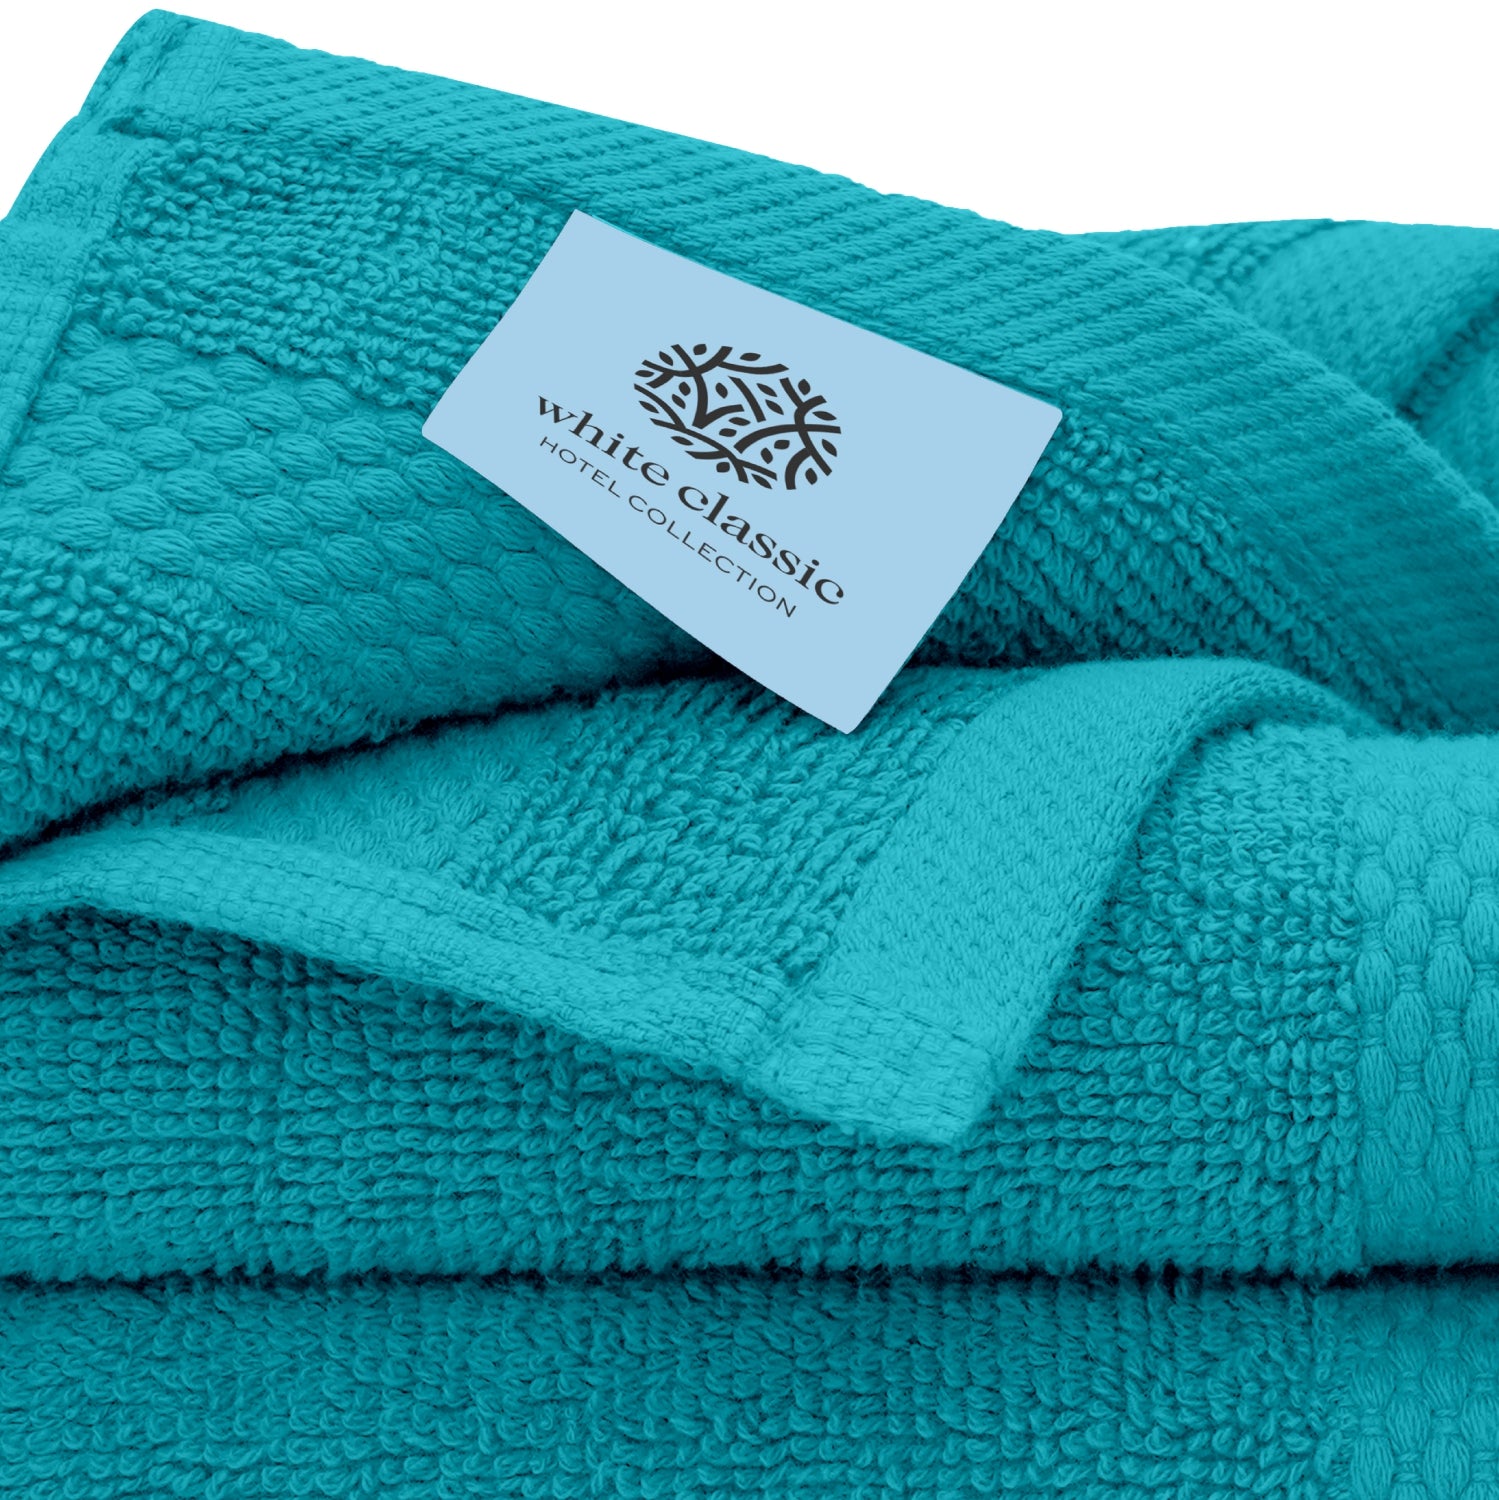 72 Pieces United Grandeur Luxury Super Absorbent Wash Cloth Size 13x13 - Bath  Towels - at 